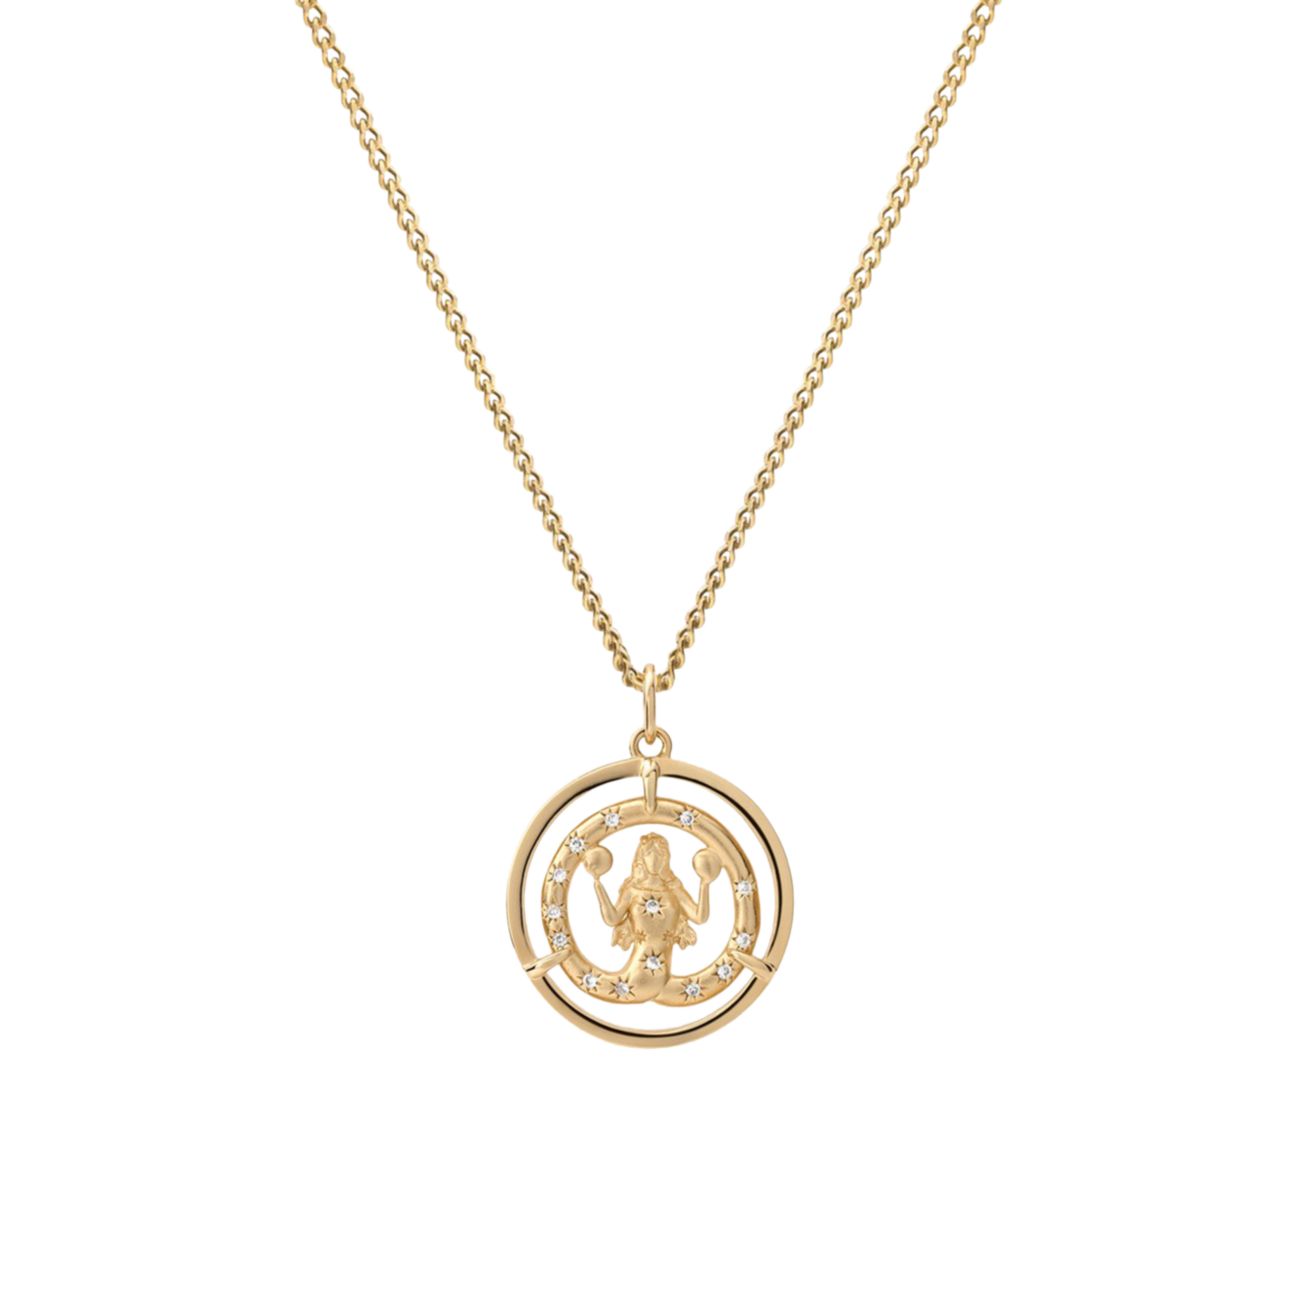 Eternita 14K Gold Vermeil & amp; Ожерелье с подвеской-цепочкой Sapphire ID Miansai